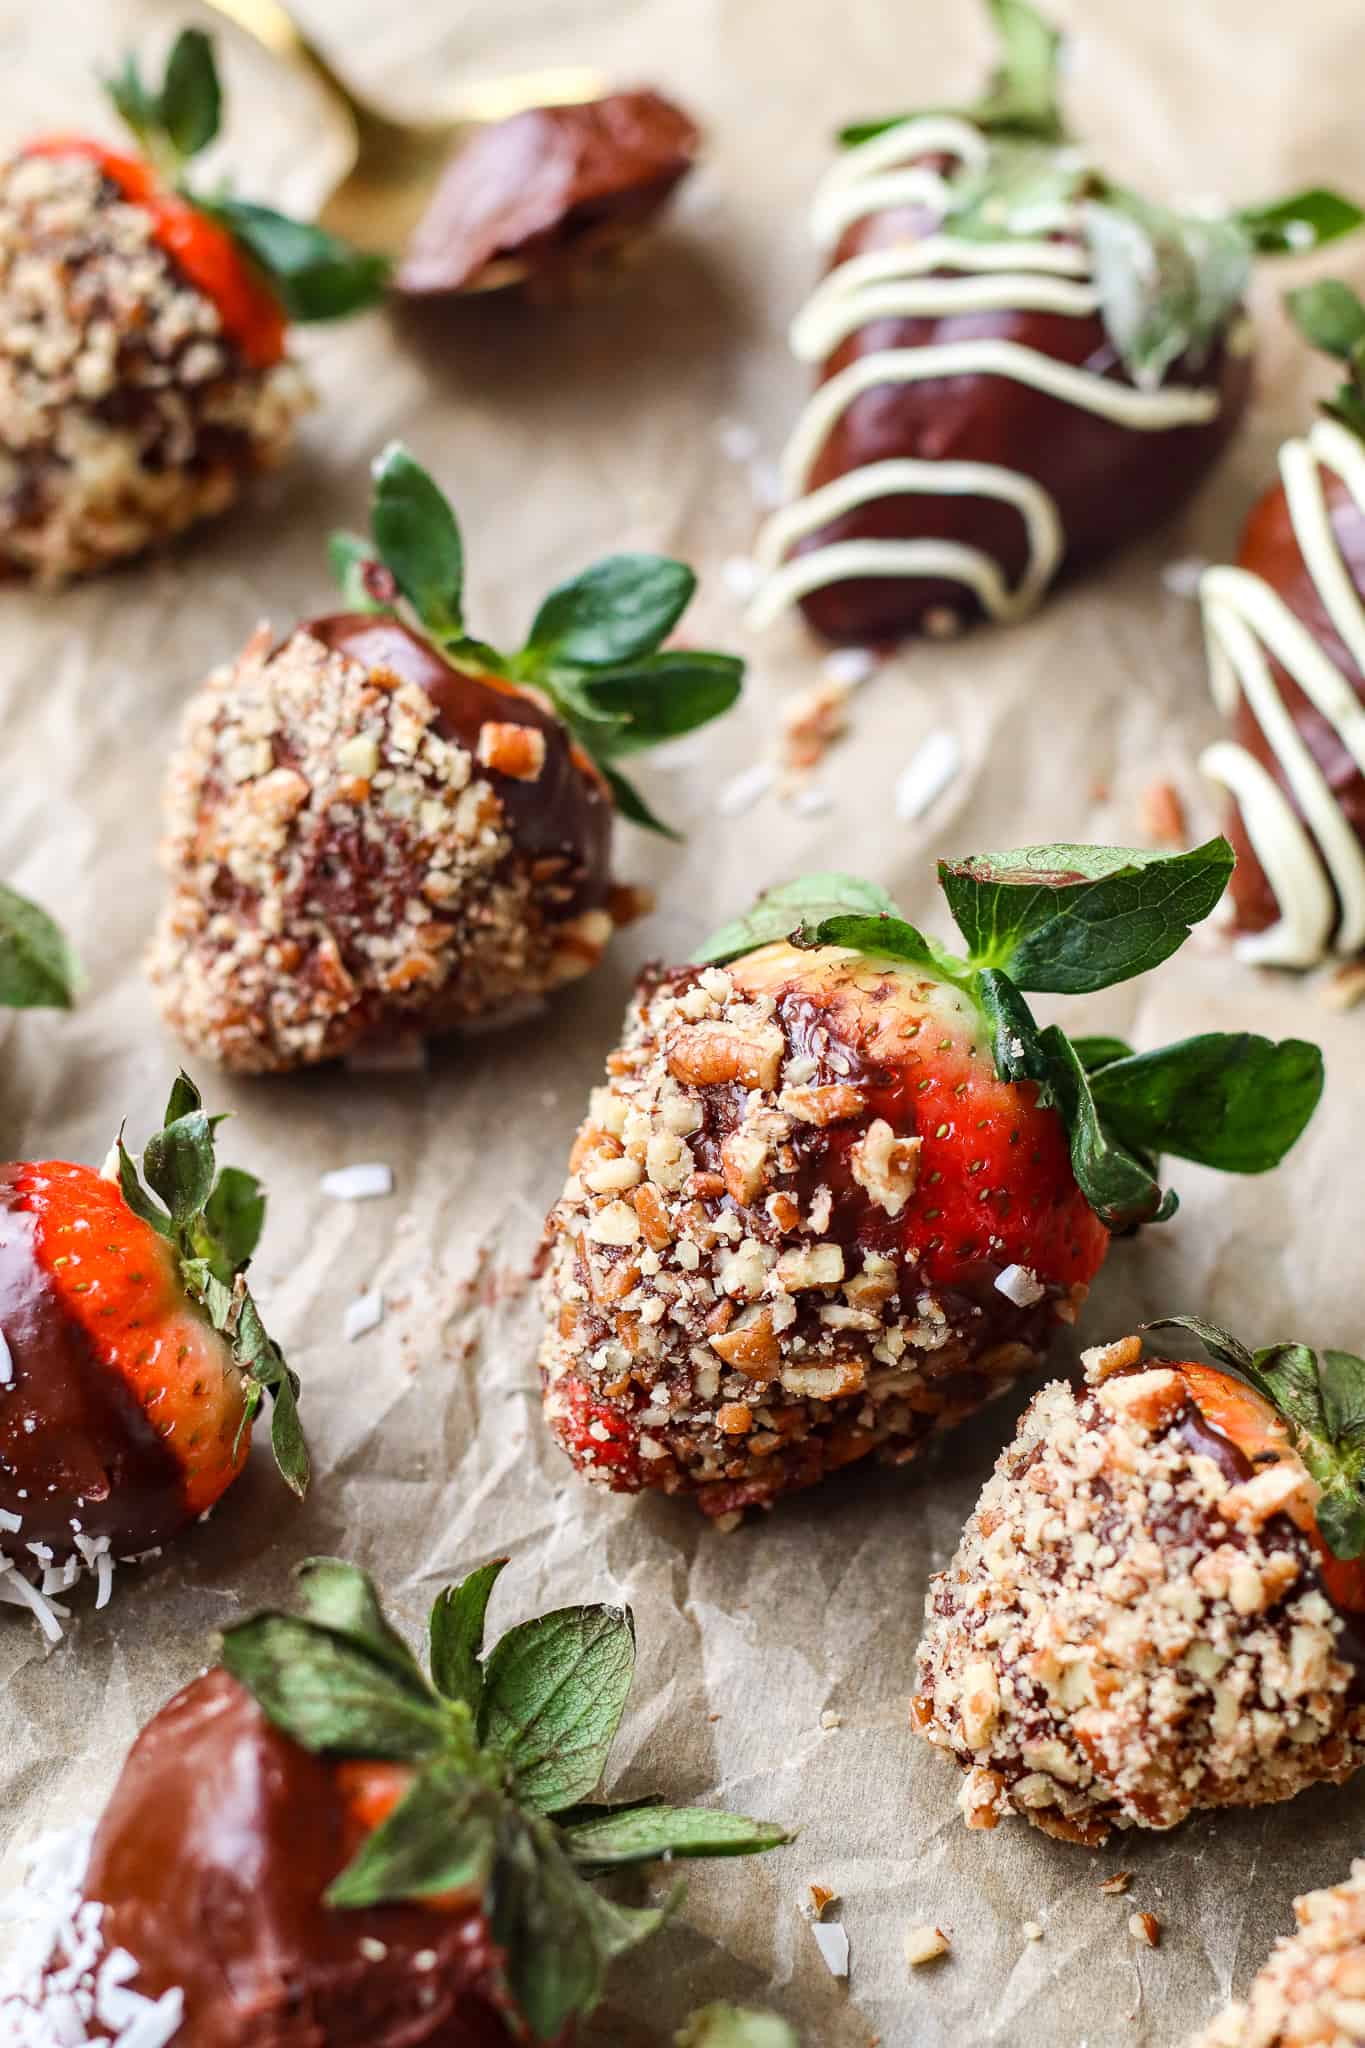 Homemade Chocolate Covered Strawberries | Easy, Healthy, & Vegan!